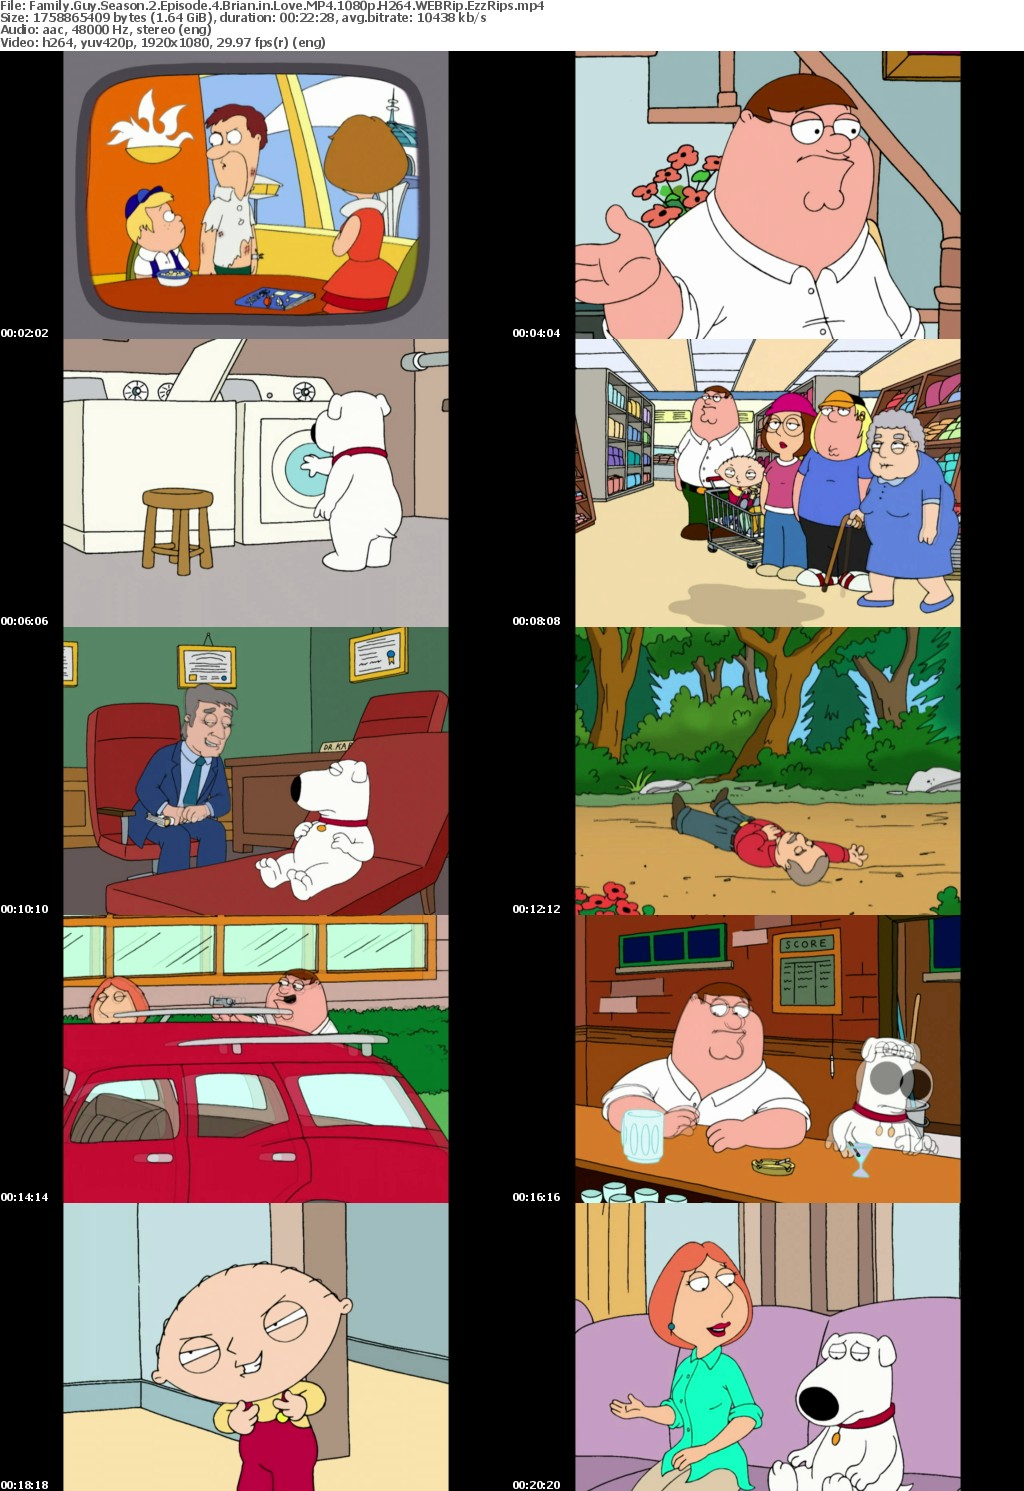 Family Guy Season 2 Episode 4 Brian in Love MP4 1080p H264 WEBRip EzzRips